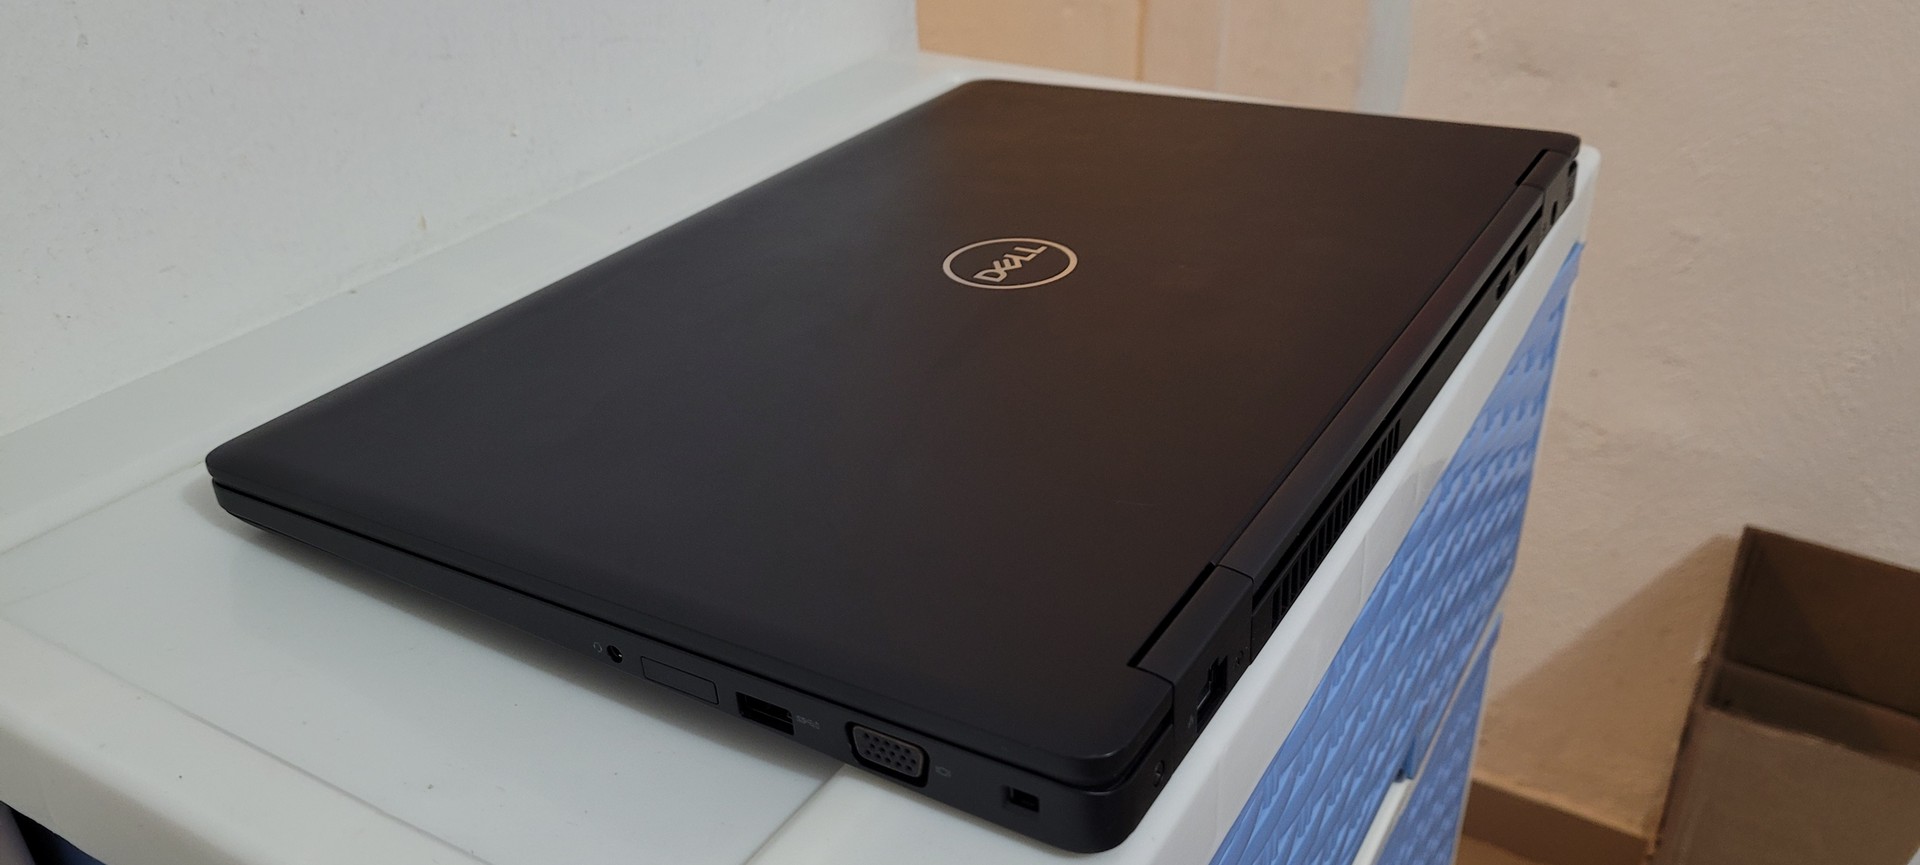 computadoras y laptops - Dell 5580 17 Pulg Core i5 7ma Gen Ram 8gb ddr4 Disco 128gb SSD Nvidea 6gb 2